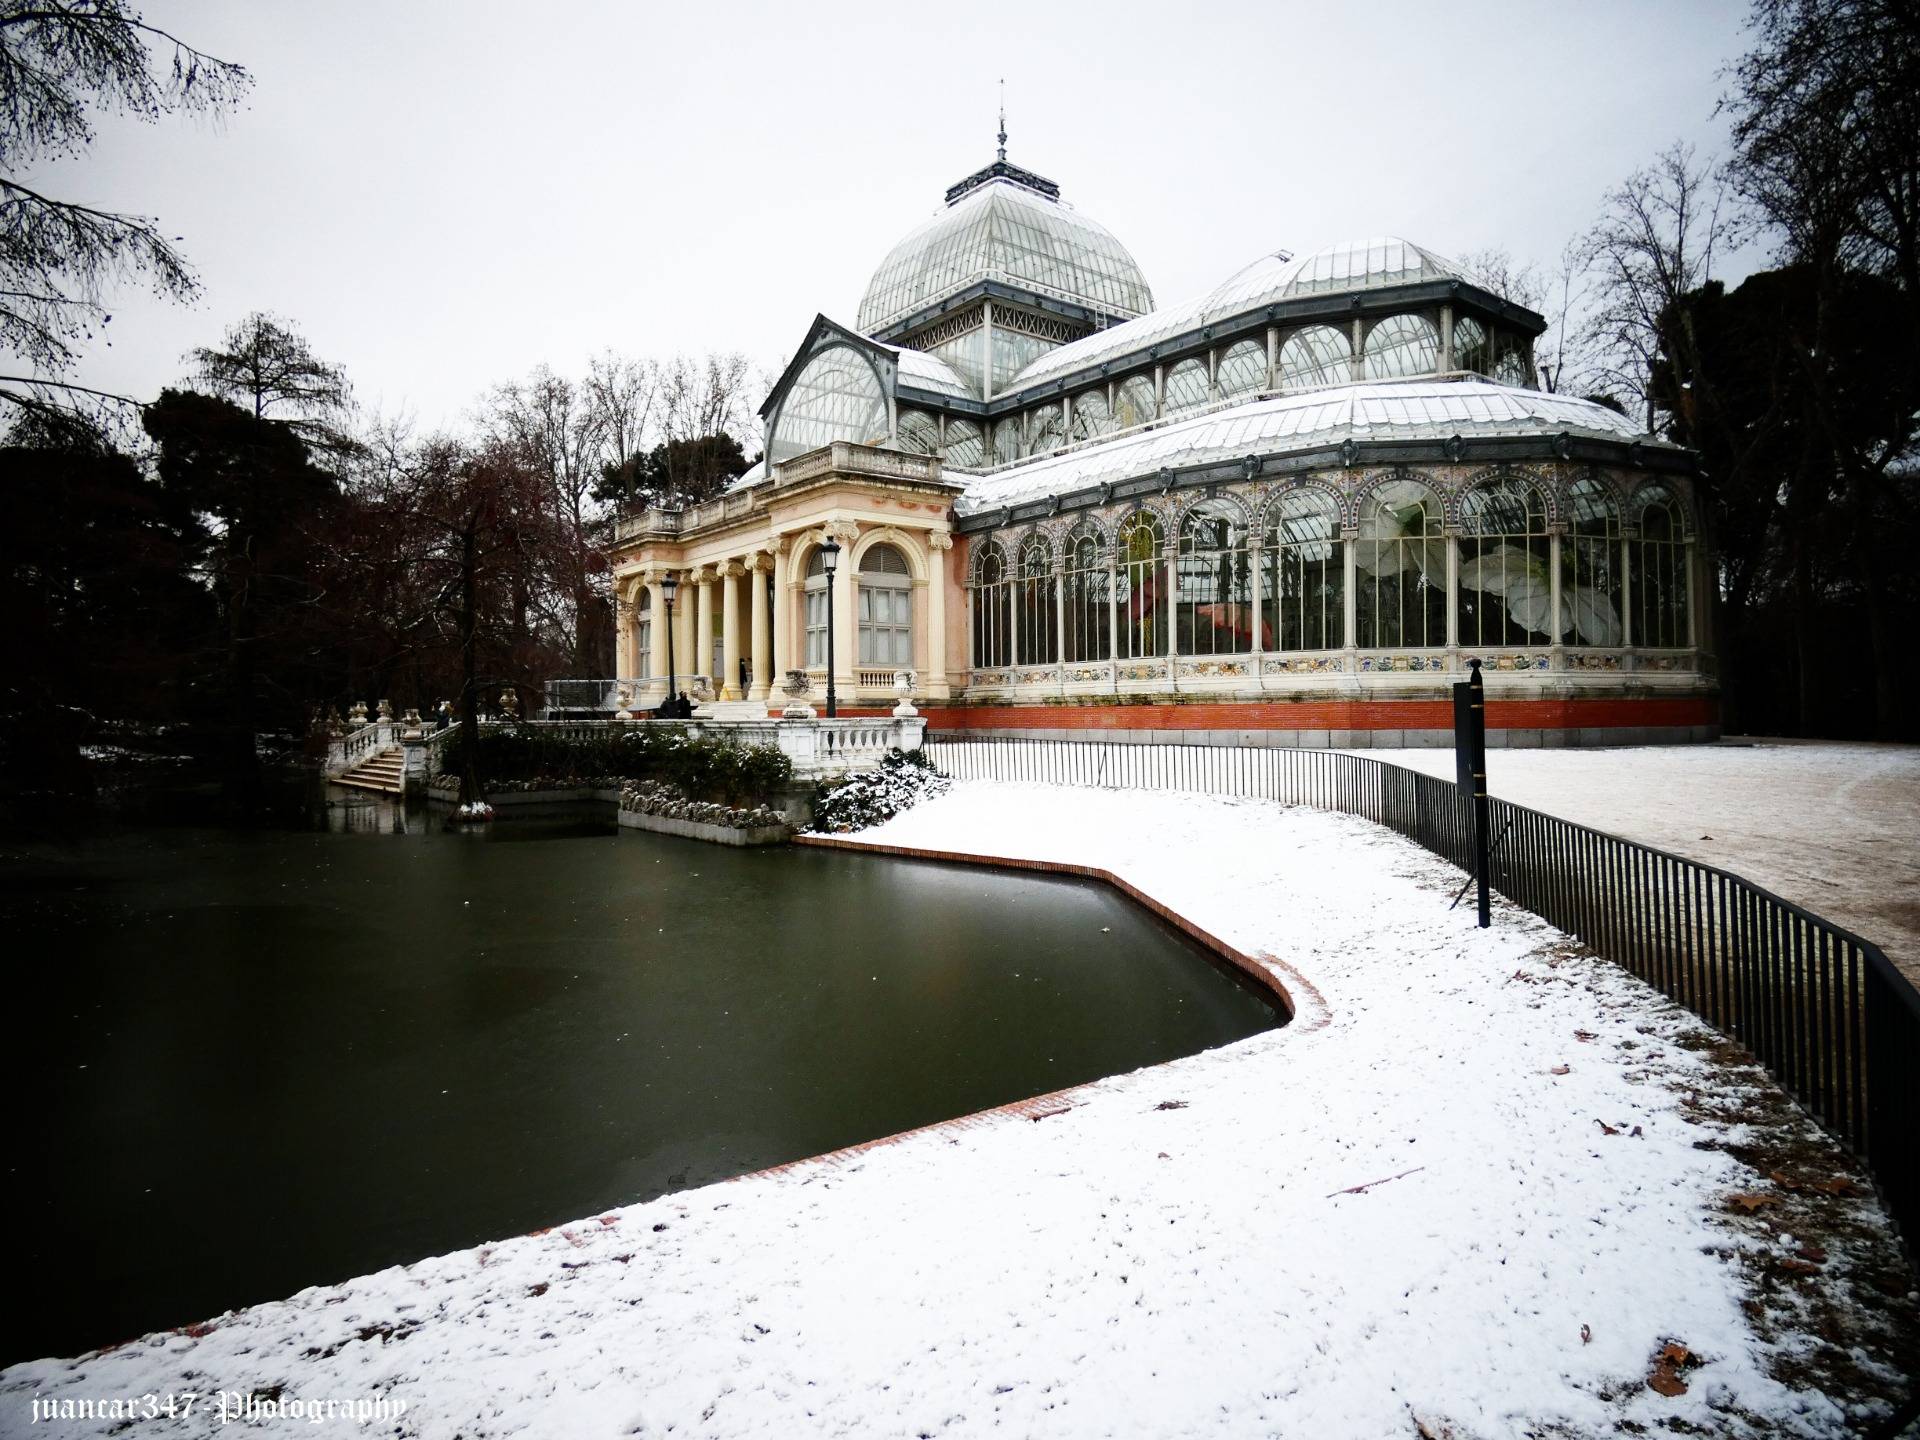 Madrid artistic destination: the snowy Crystal Palace